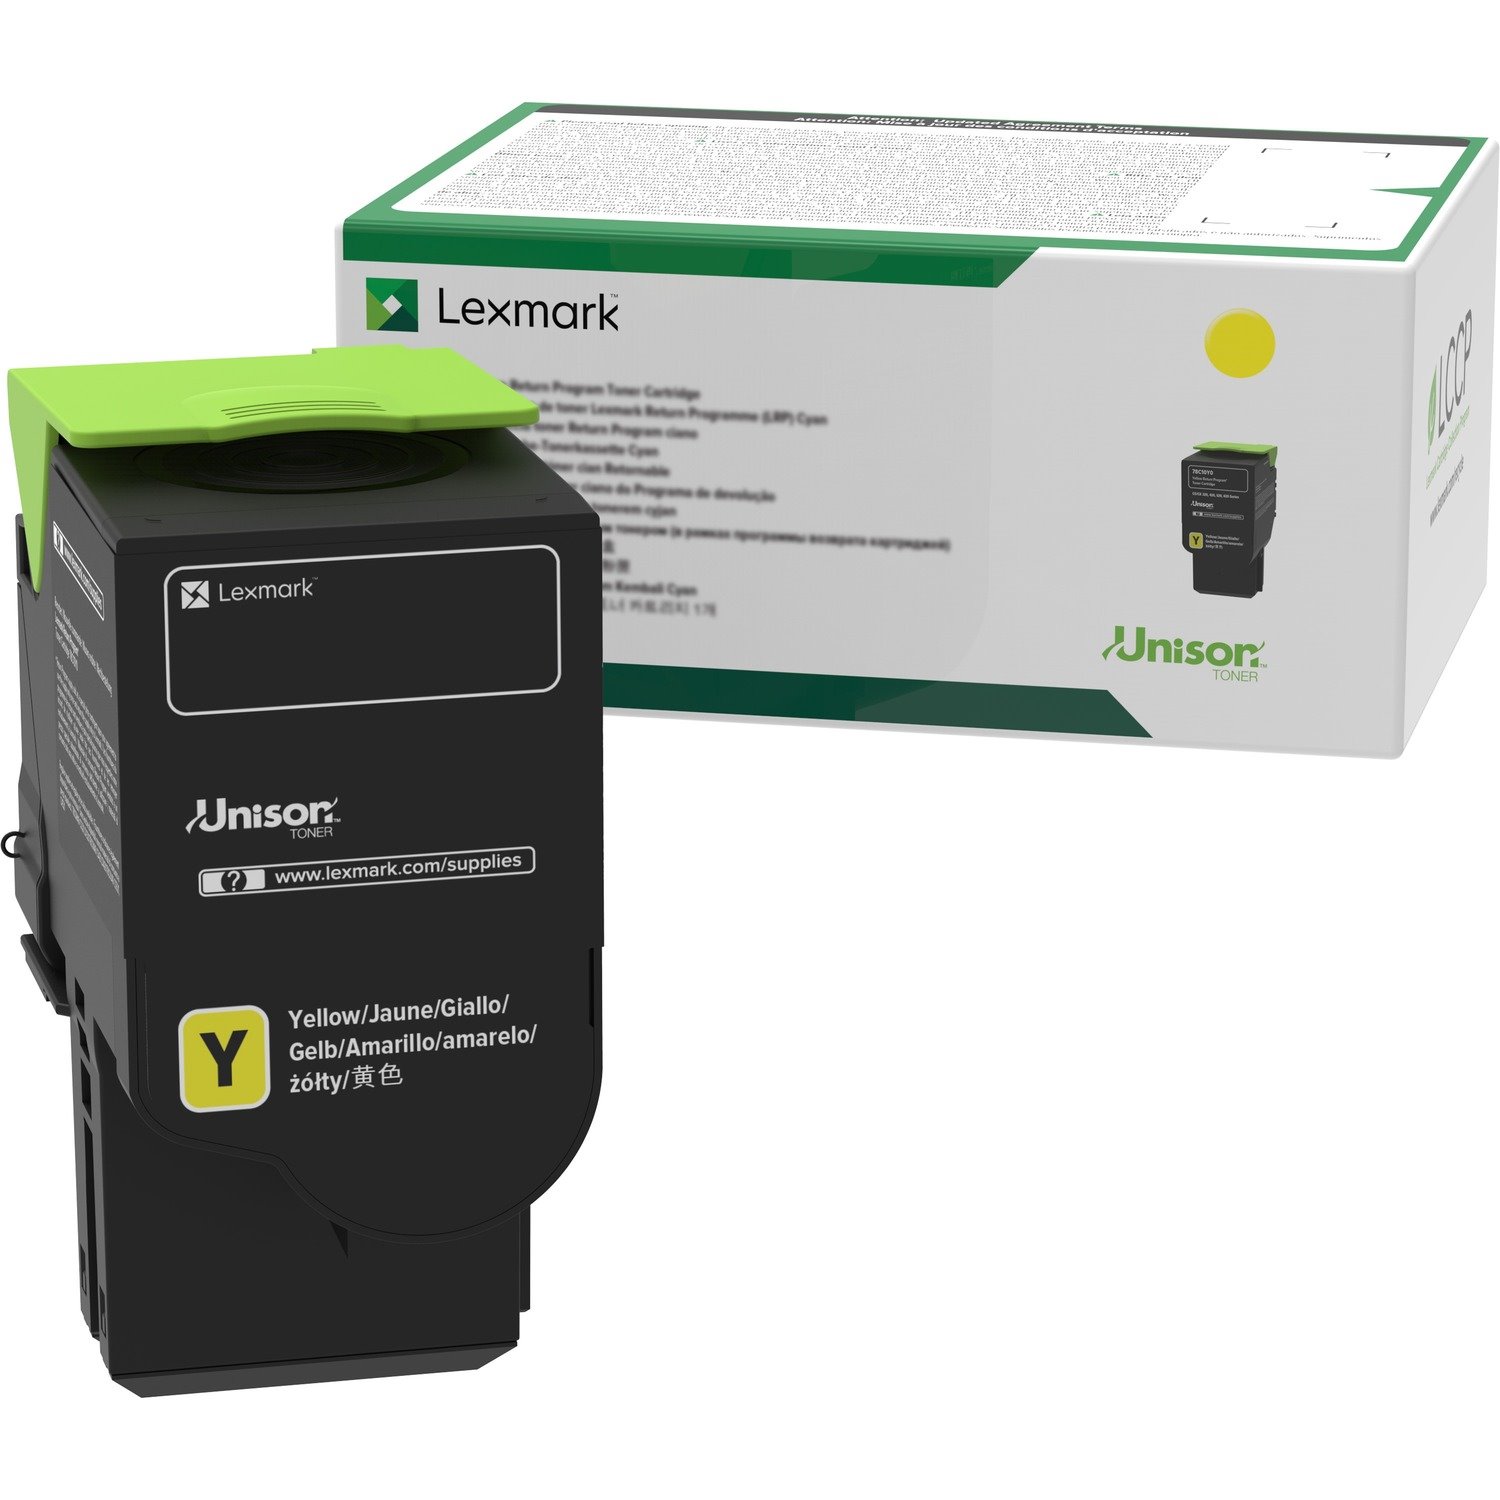 Lexmark Unison Original Ultra High Yield Laser Toner Cartridge - Yellow - 1 Each